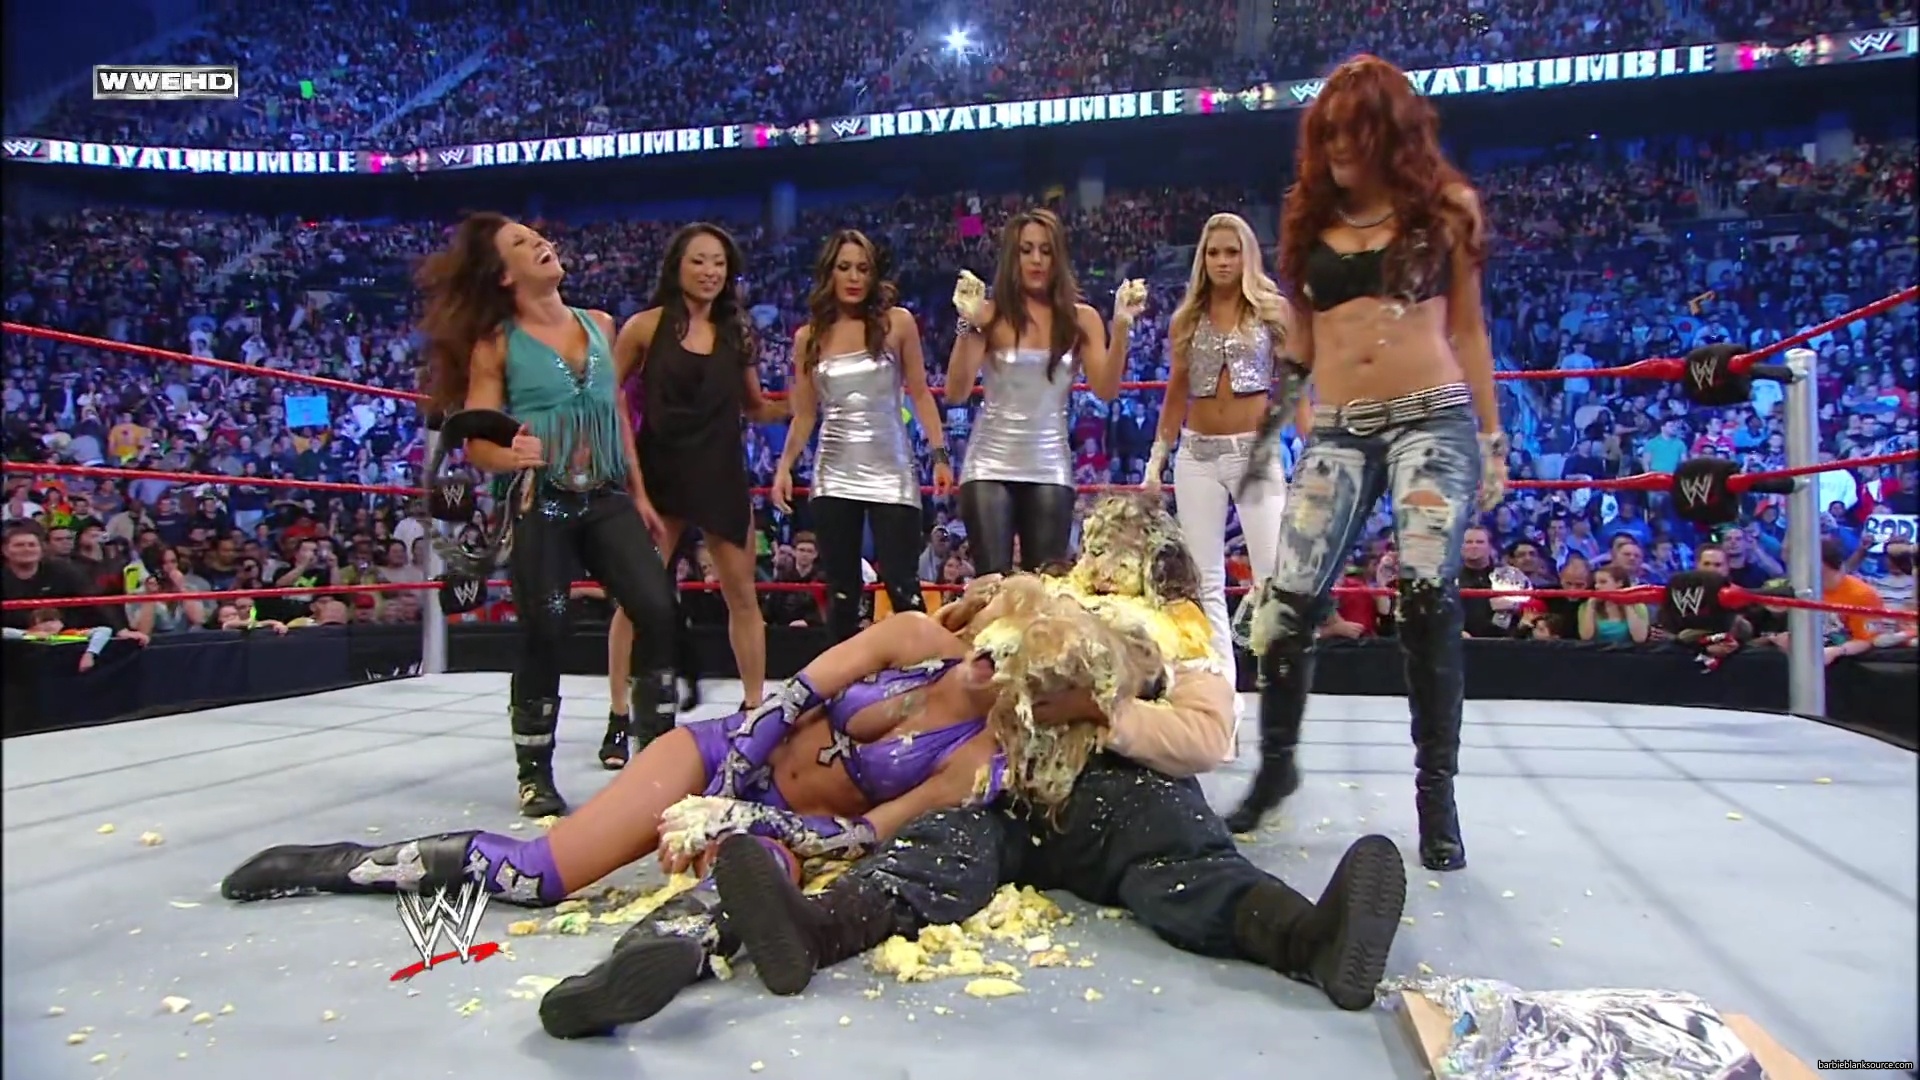 WWE_Royal_Rumble_2010_Michelle_vs_Mickie_mp40665.jpg